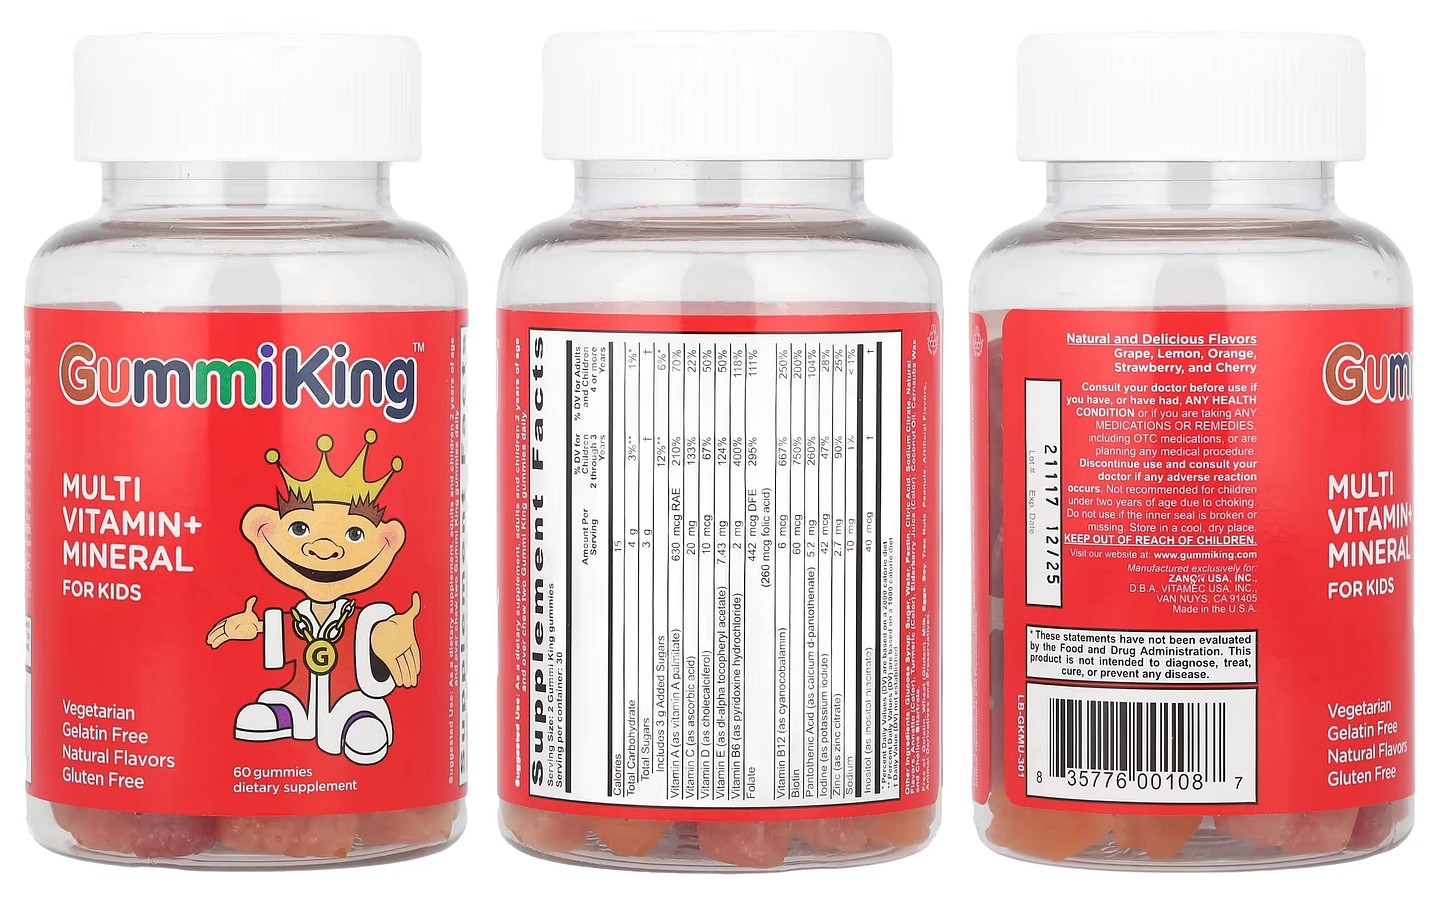 GummiKing, Multi Vitamin + Mineral For Kids packaging